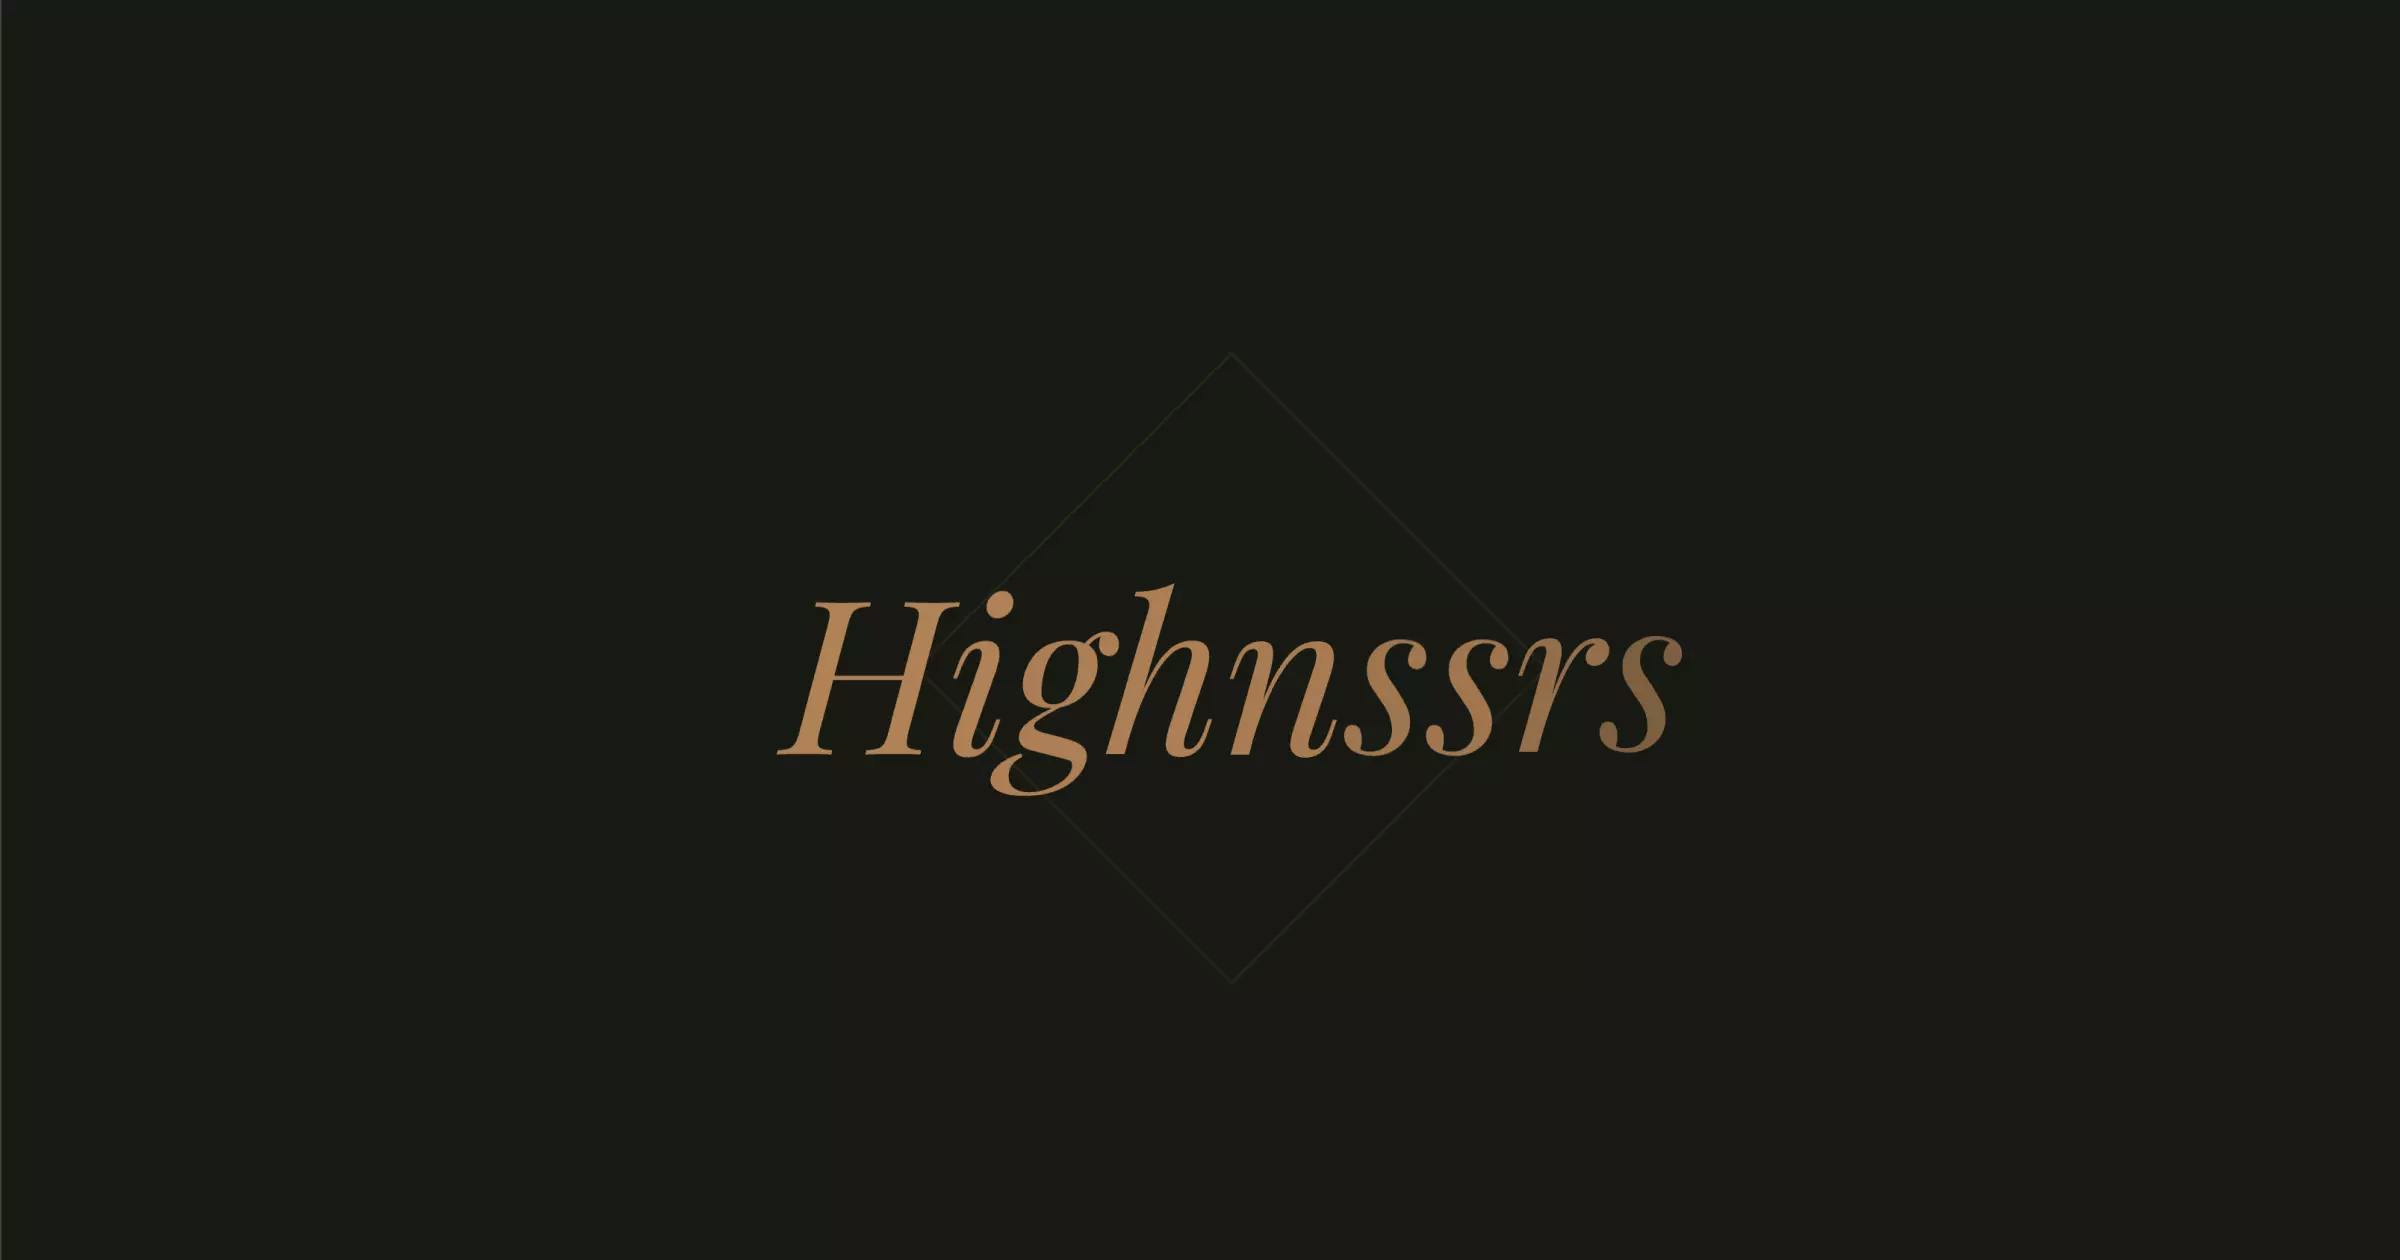 Highness service image